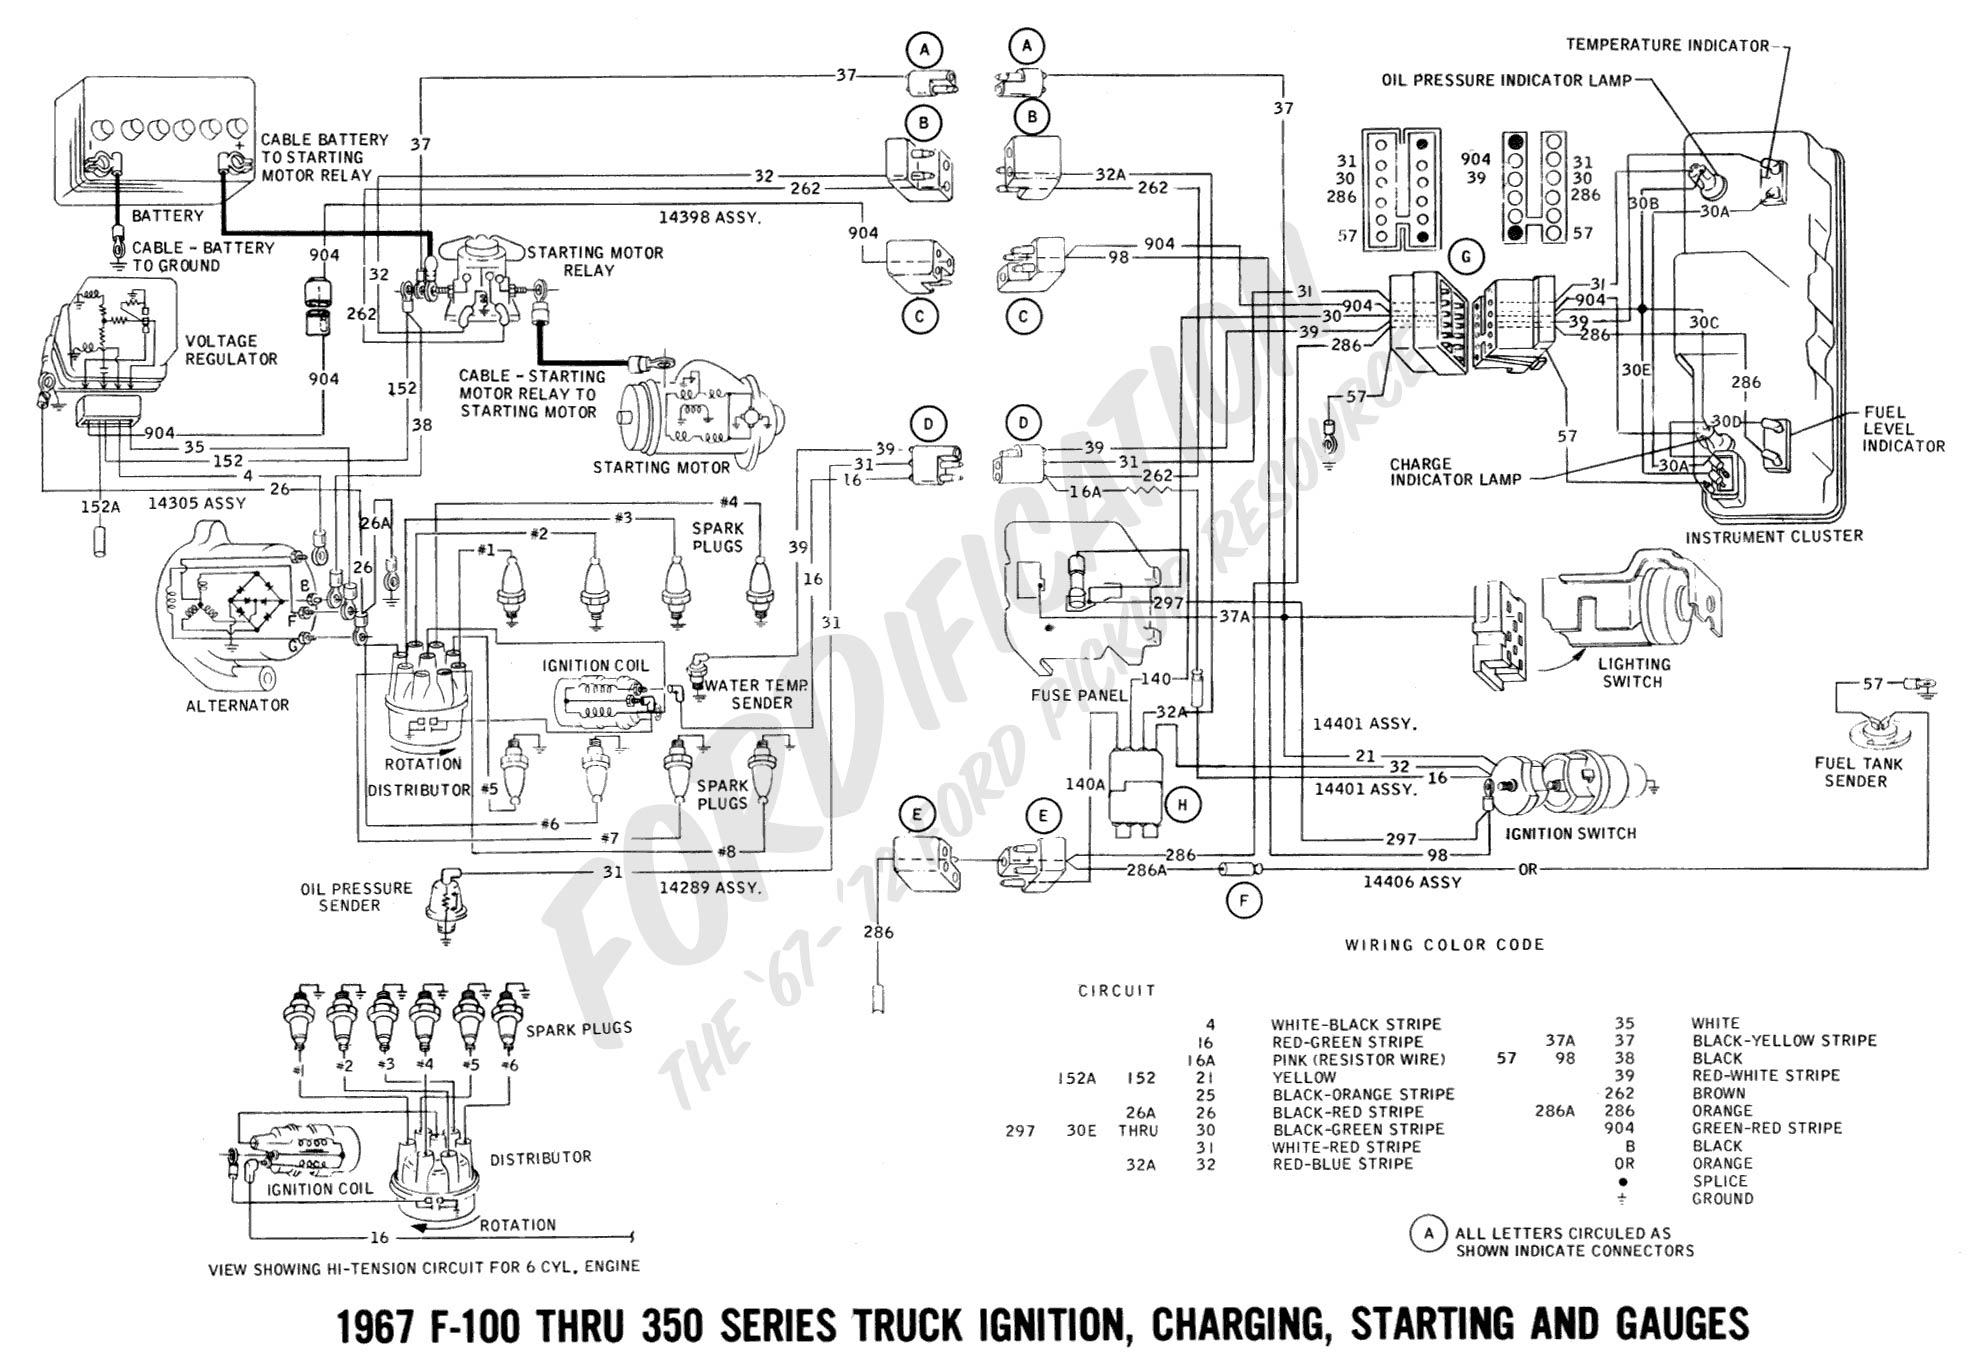 1999 F150 Power Window Wiring Diagram from www.fordification.com